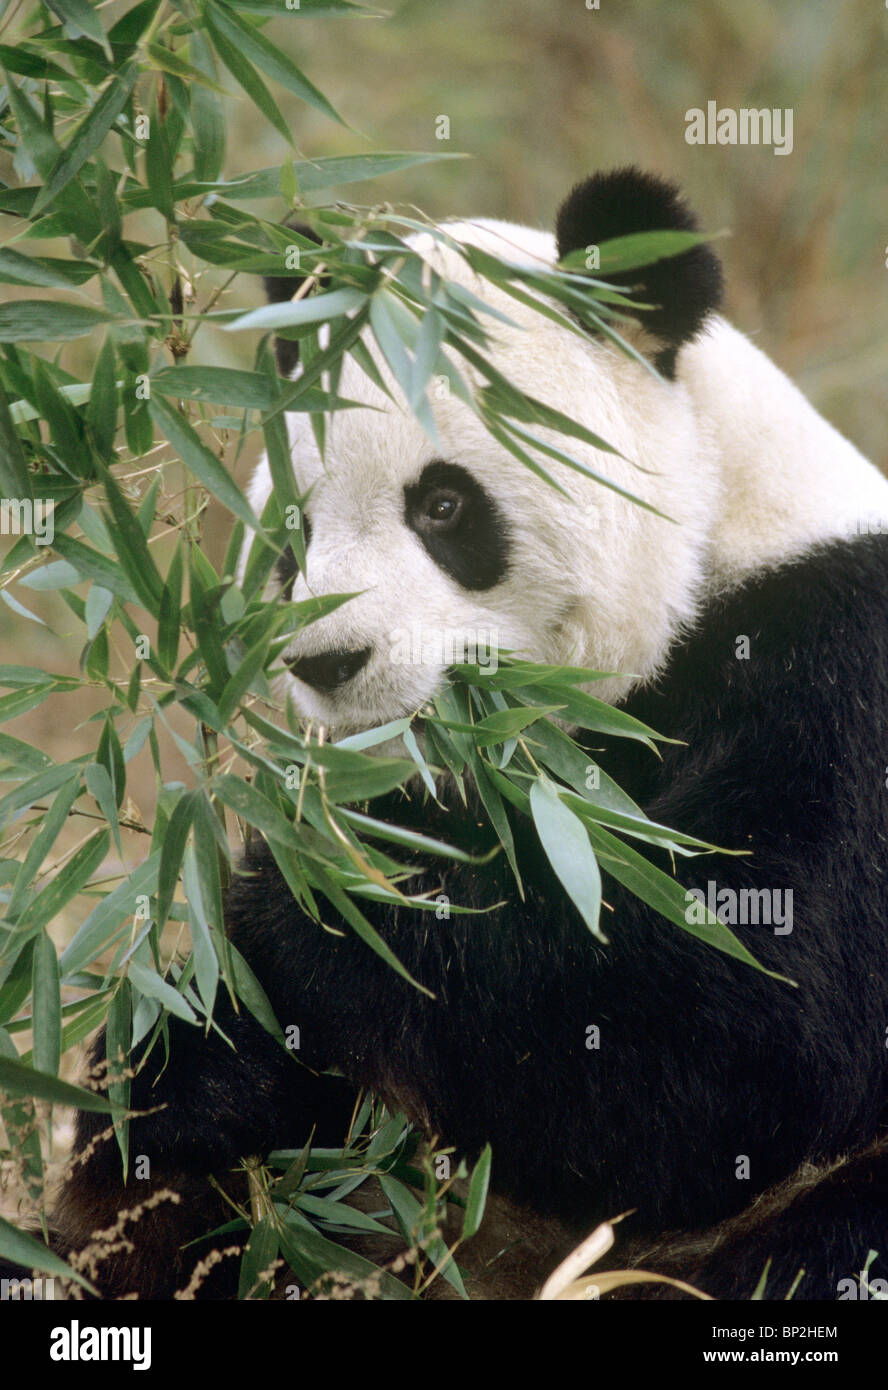 Giant panda feeding on bamboo, Wolong, Sichuan Province, China. Stock Photo